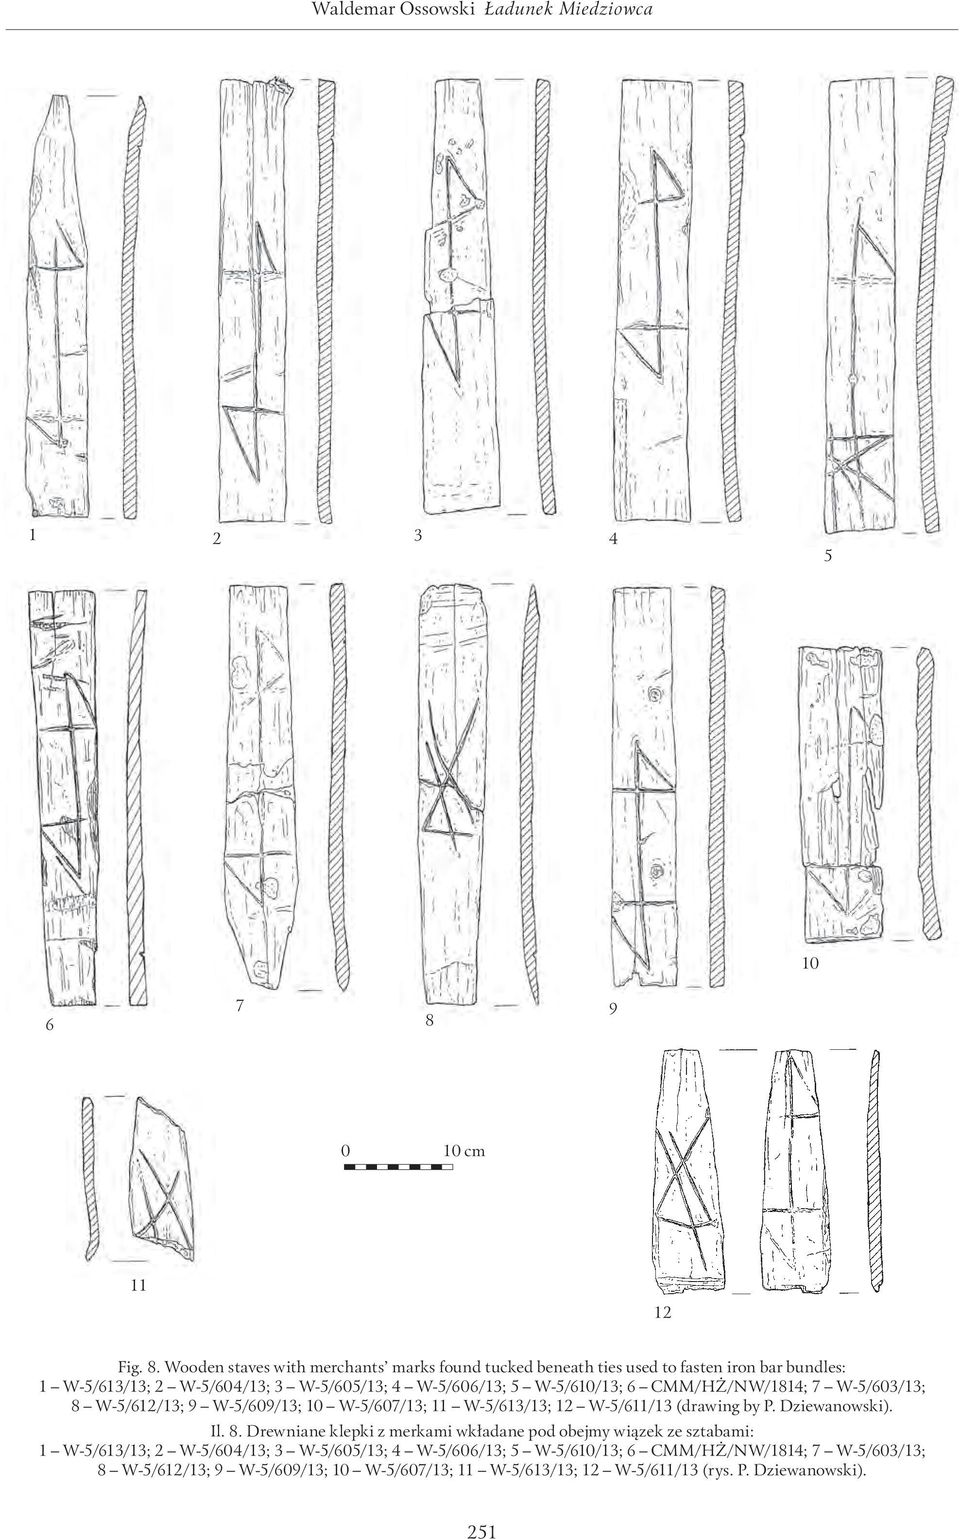 Wooden staves with merchants marks found tucked beneath ties used to fasten iron bar bundles: 1 W-5/613/13; 2 W-5/604/13; 3 W-5/605/13; 4 W-5/606/13; 5 W-5/610/13;